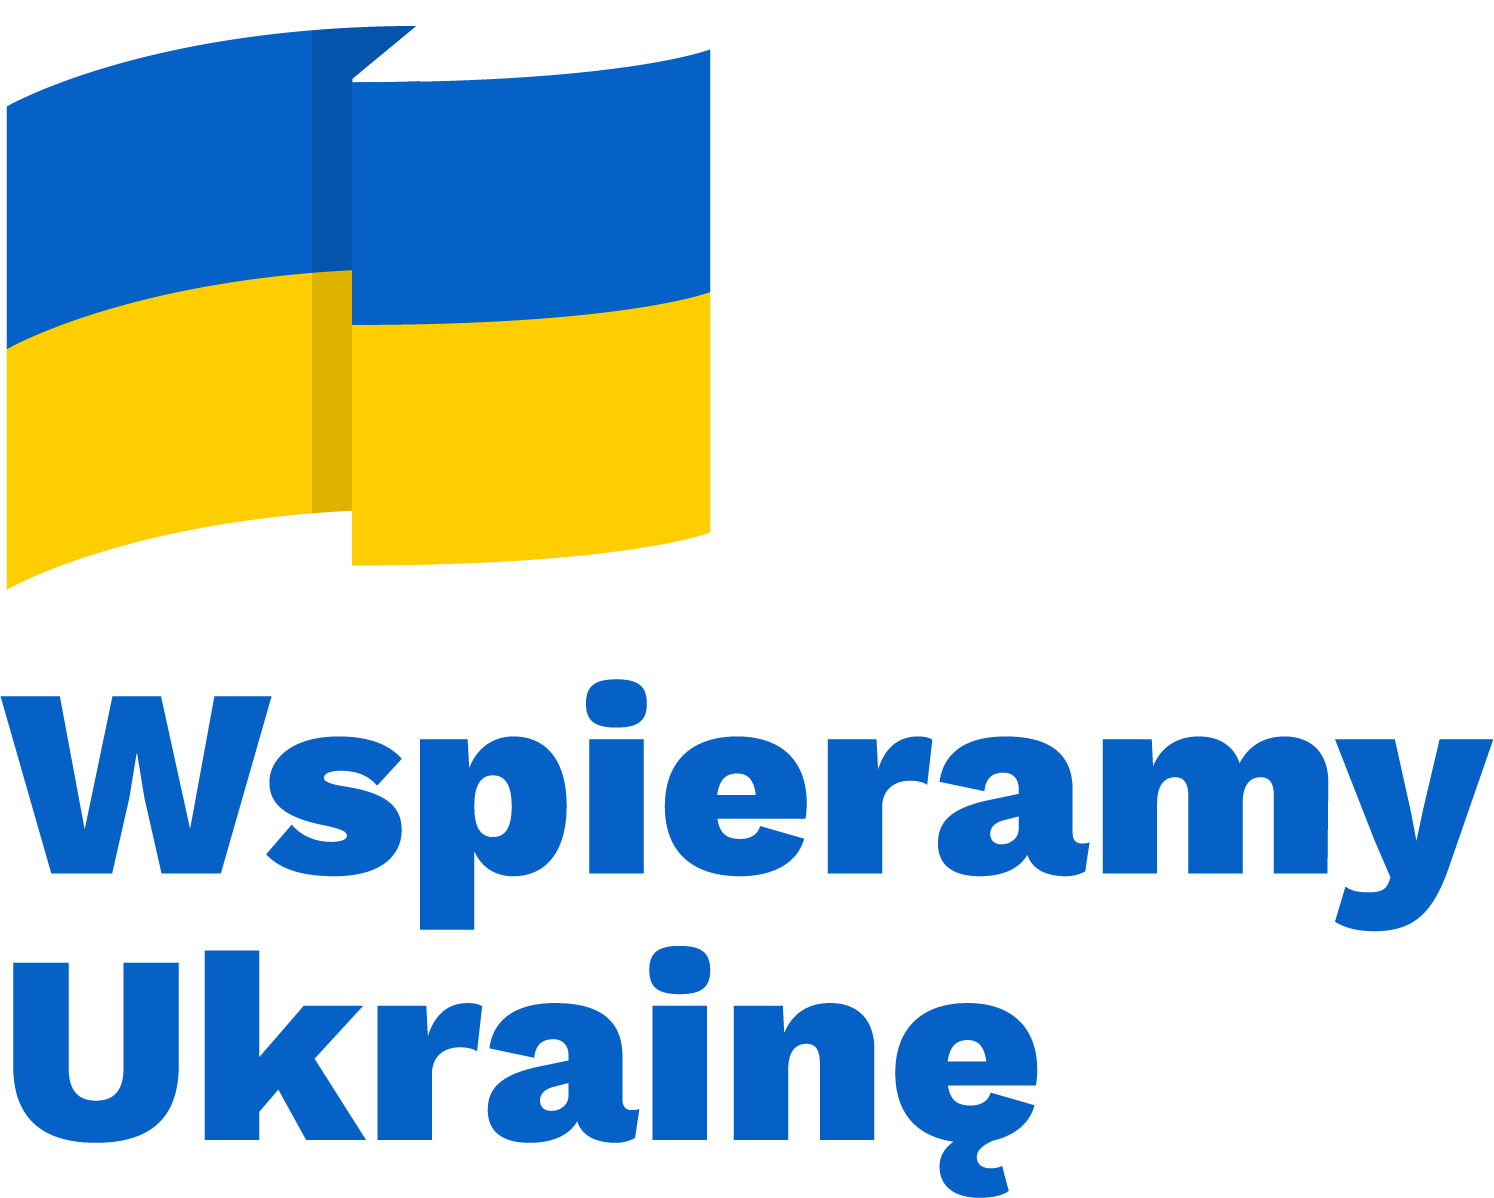 Ukrainina flag and text in Polish we support Ukraine